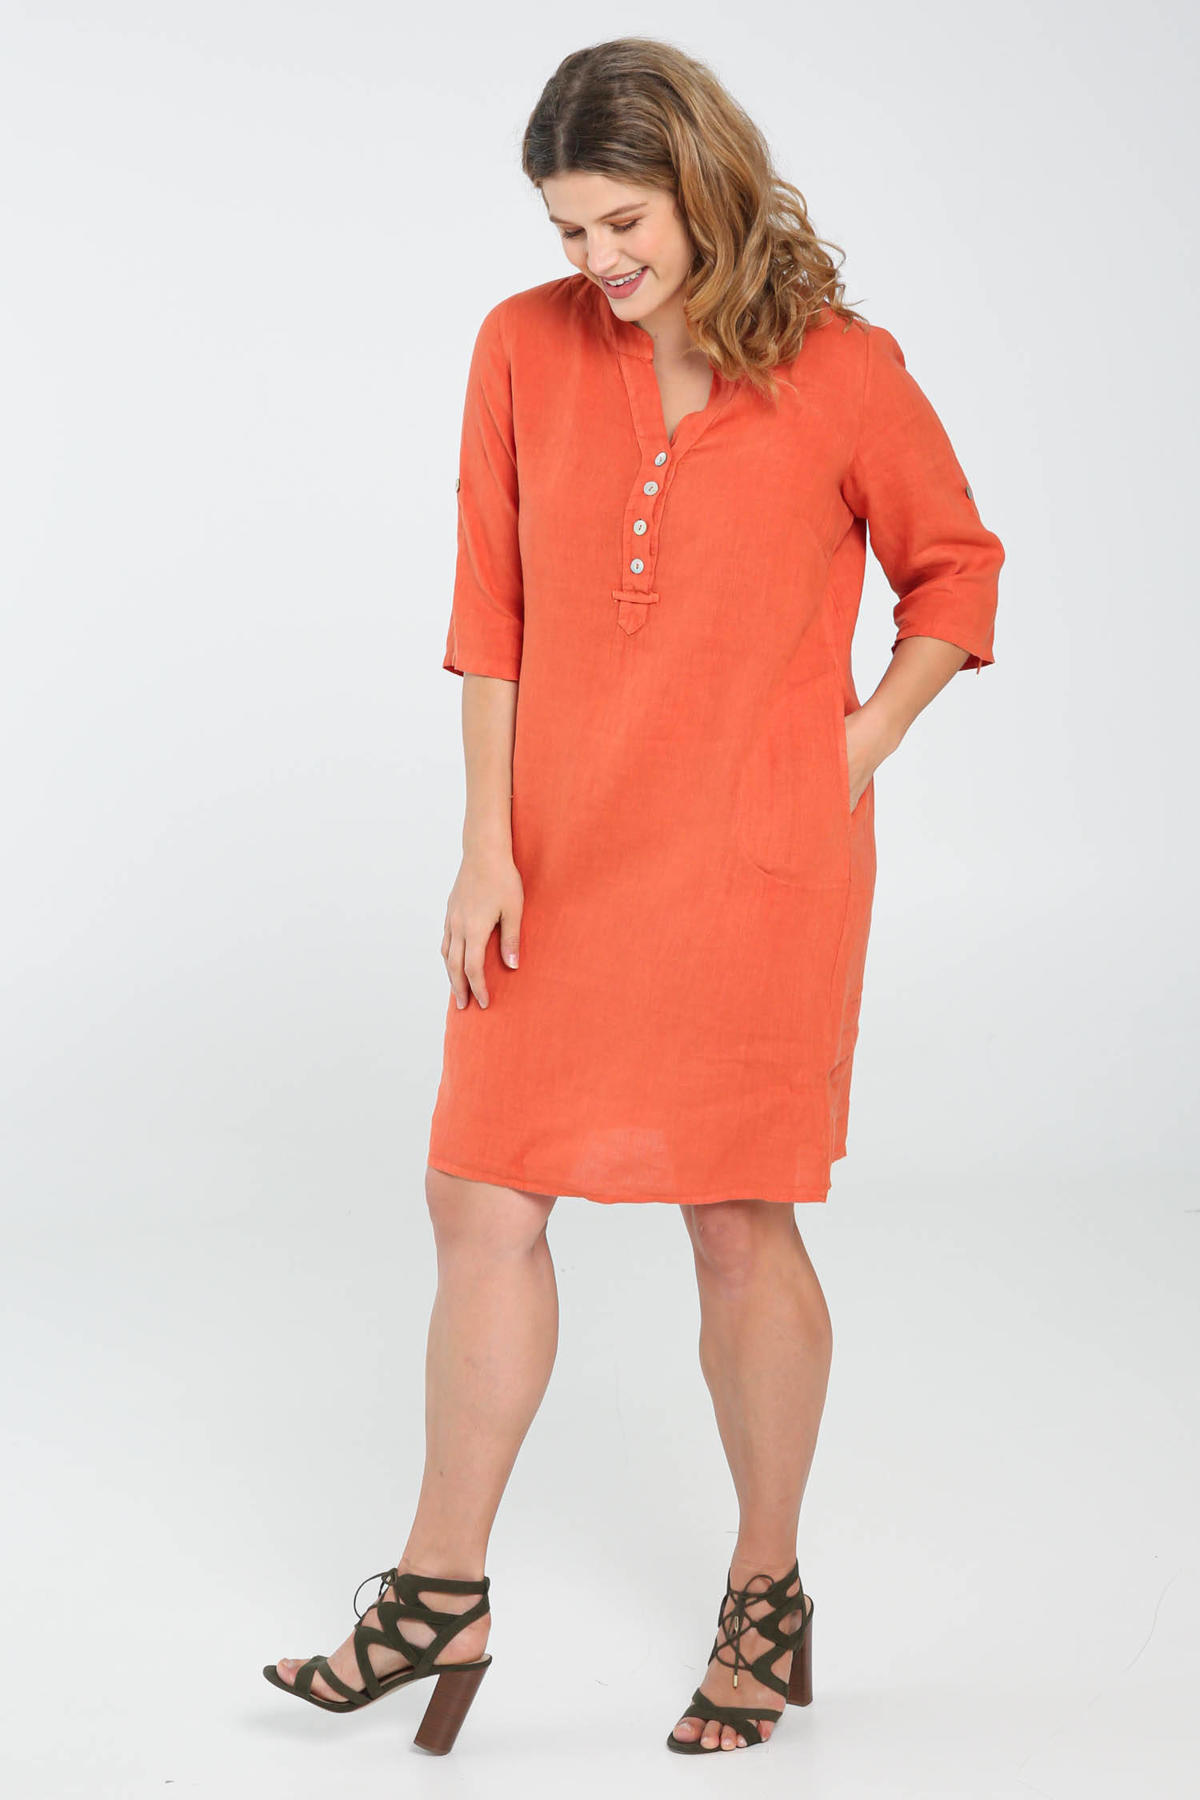 Midden Druppelen Infrarood Paprika linnen jurk oranje | wehkamp